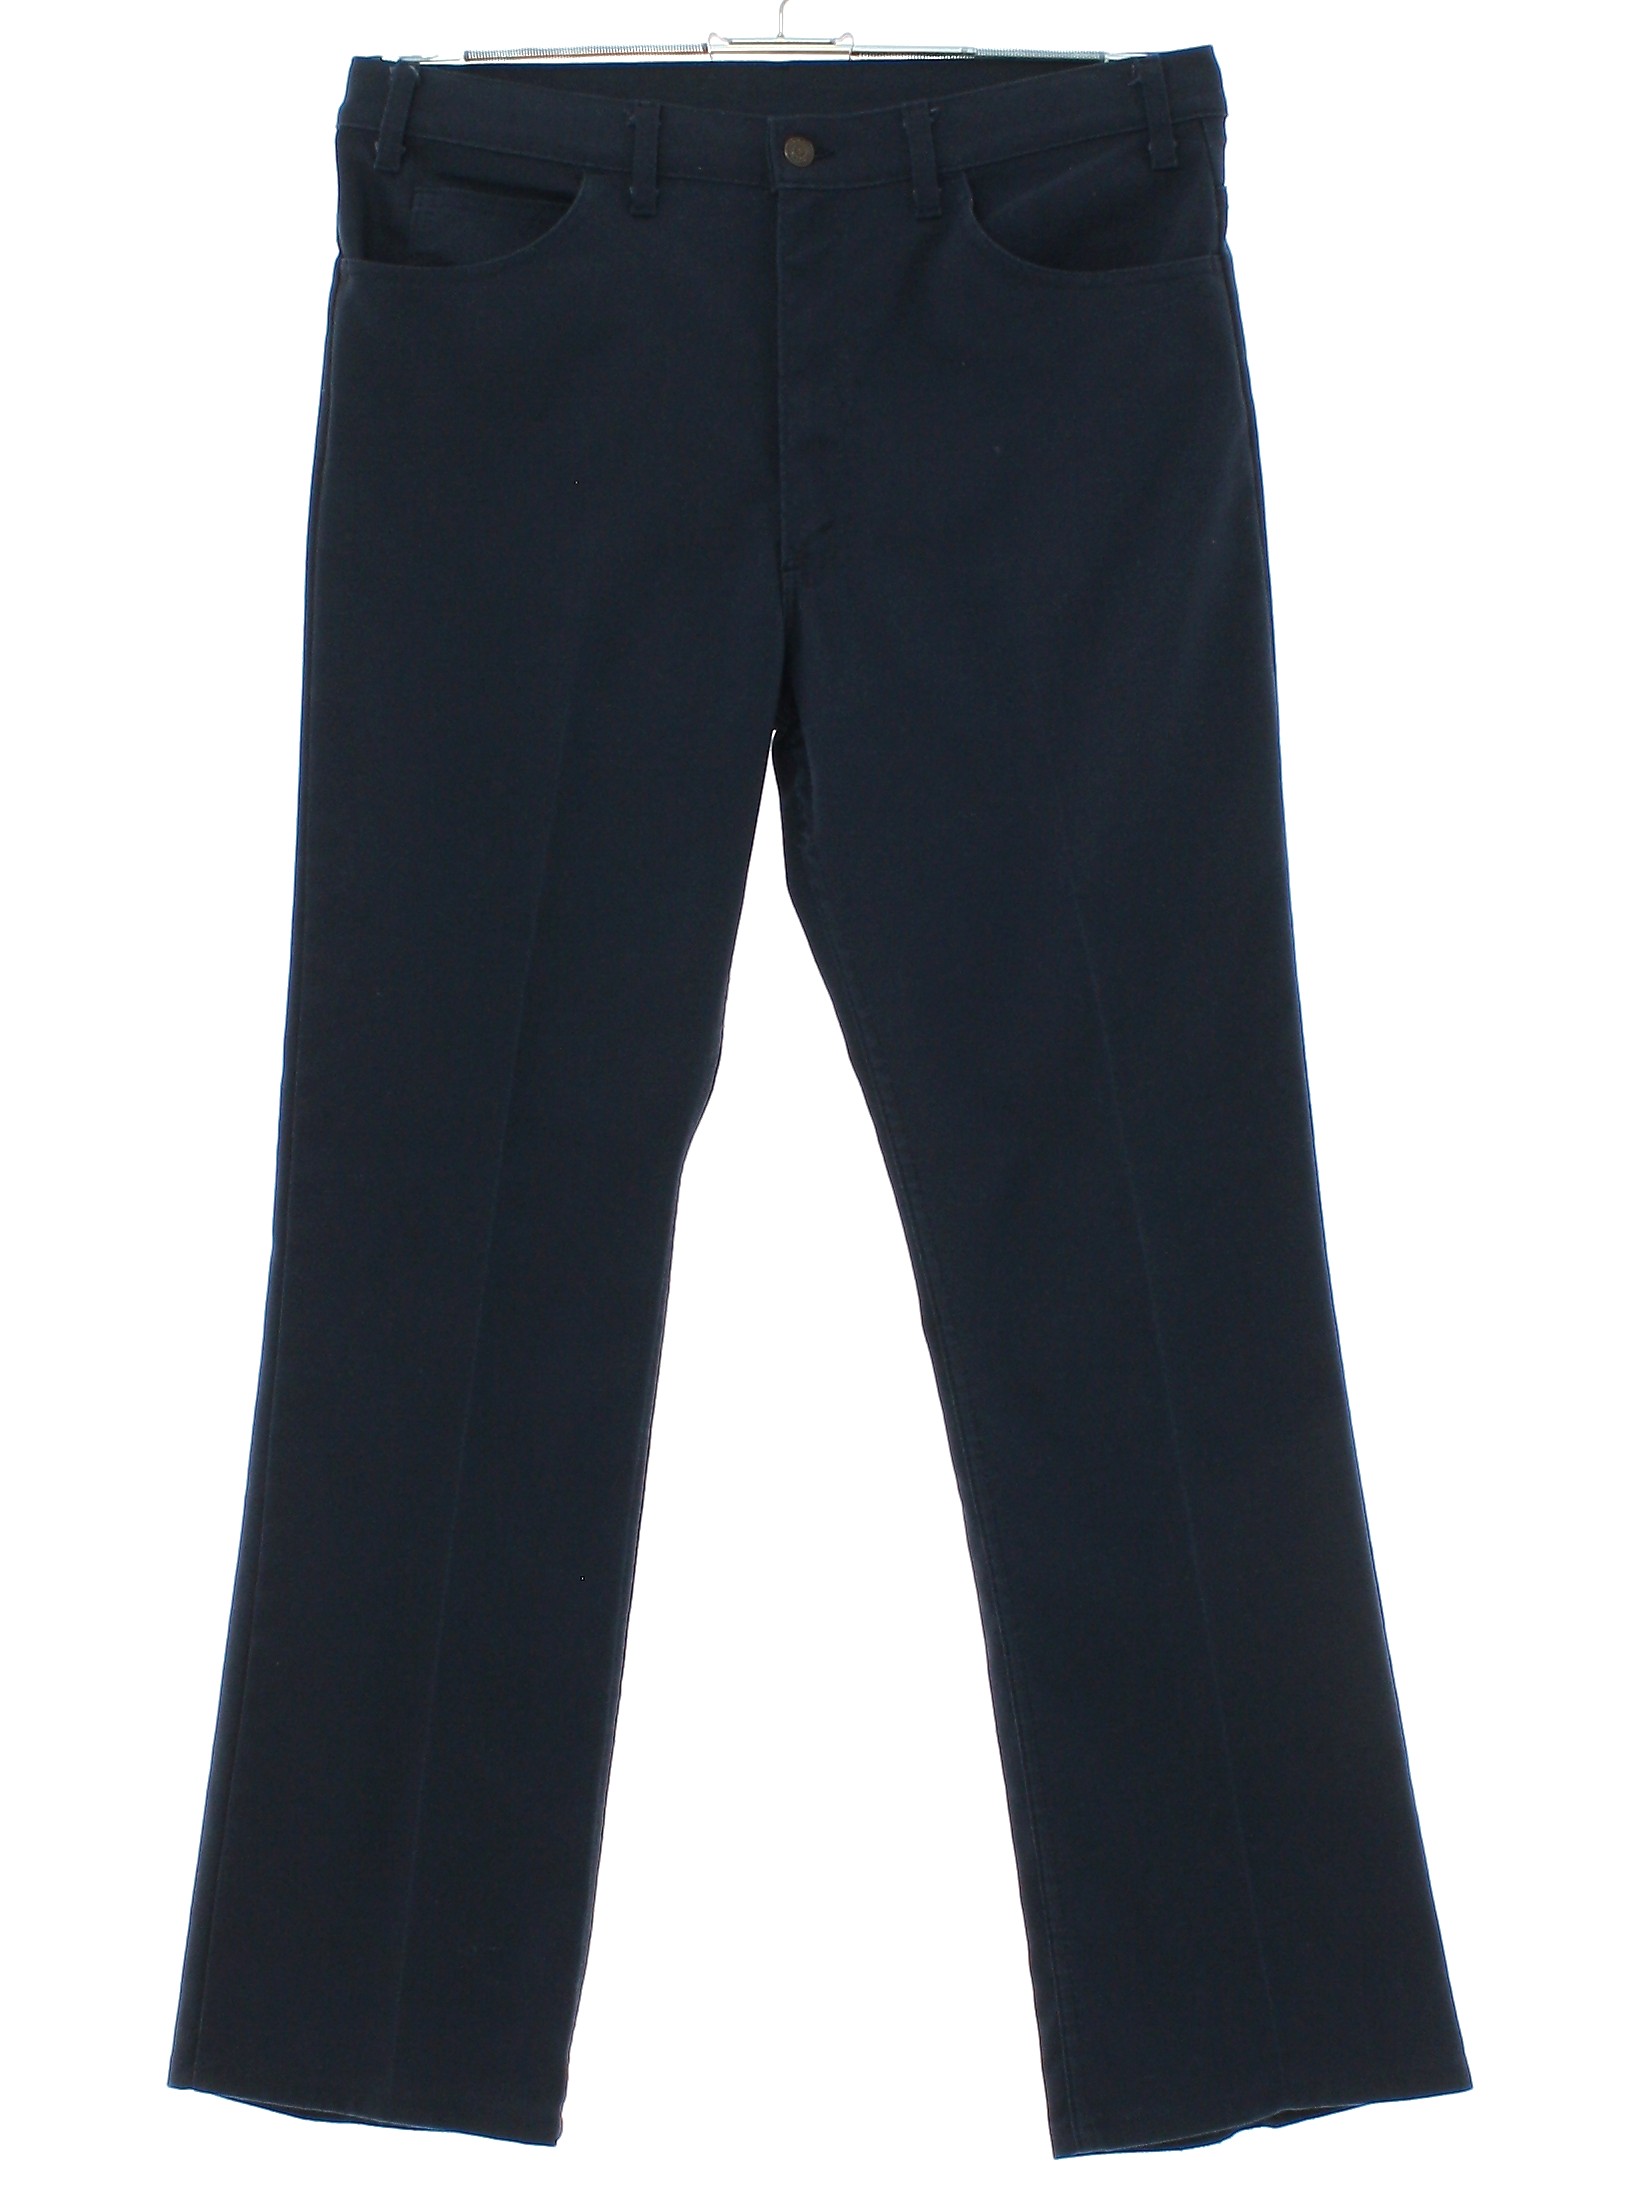 Vintage 1970's Pants: 70s -Levis- Mens navy blue solid colored ...